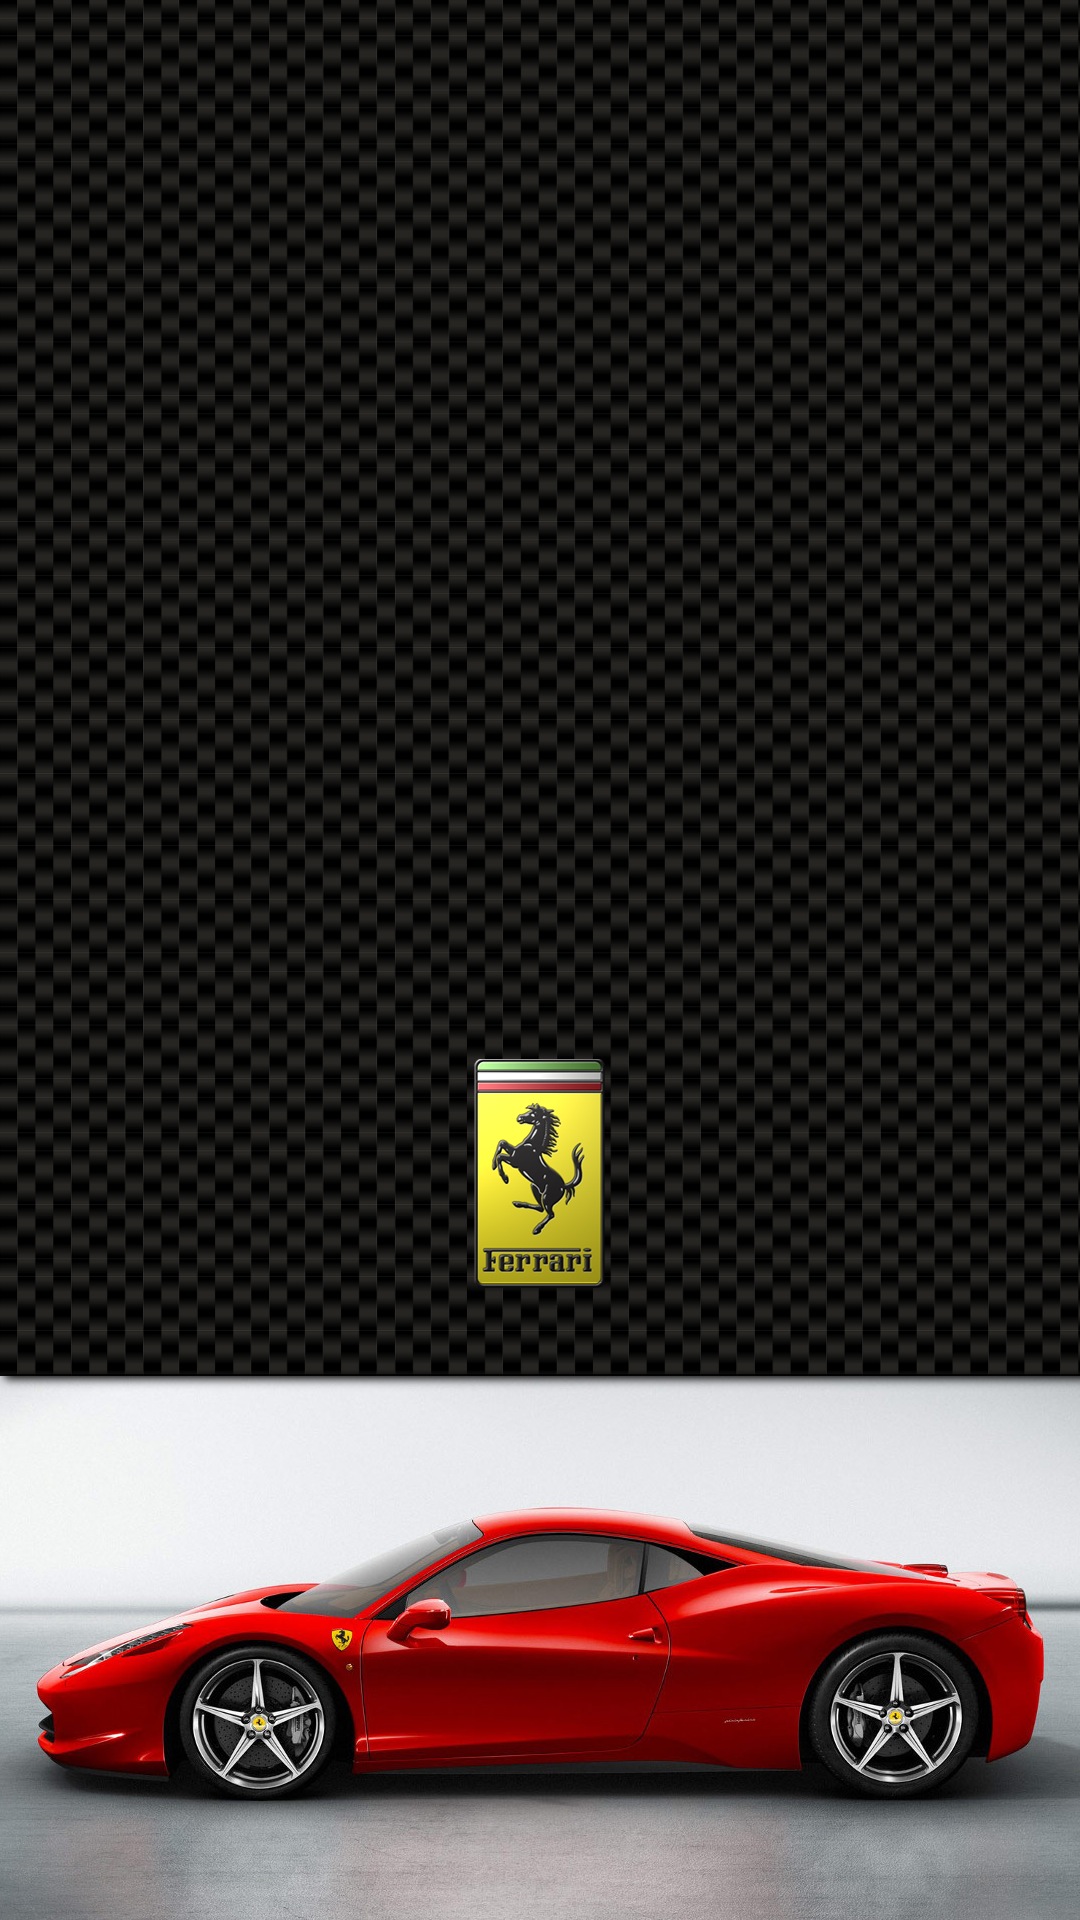 Iphone 6 Plus Ferrari - HD Wallpaper 